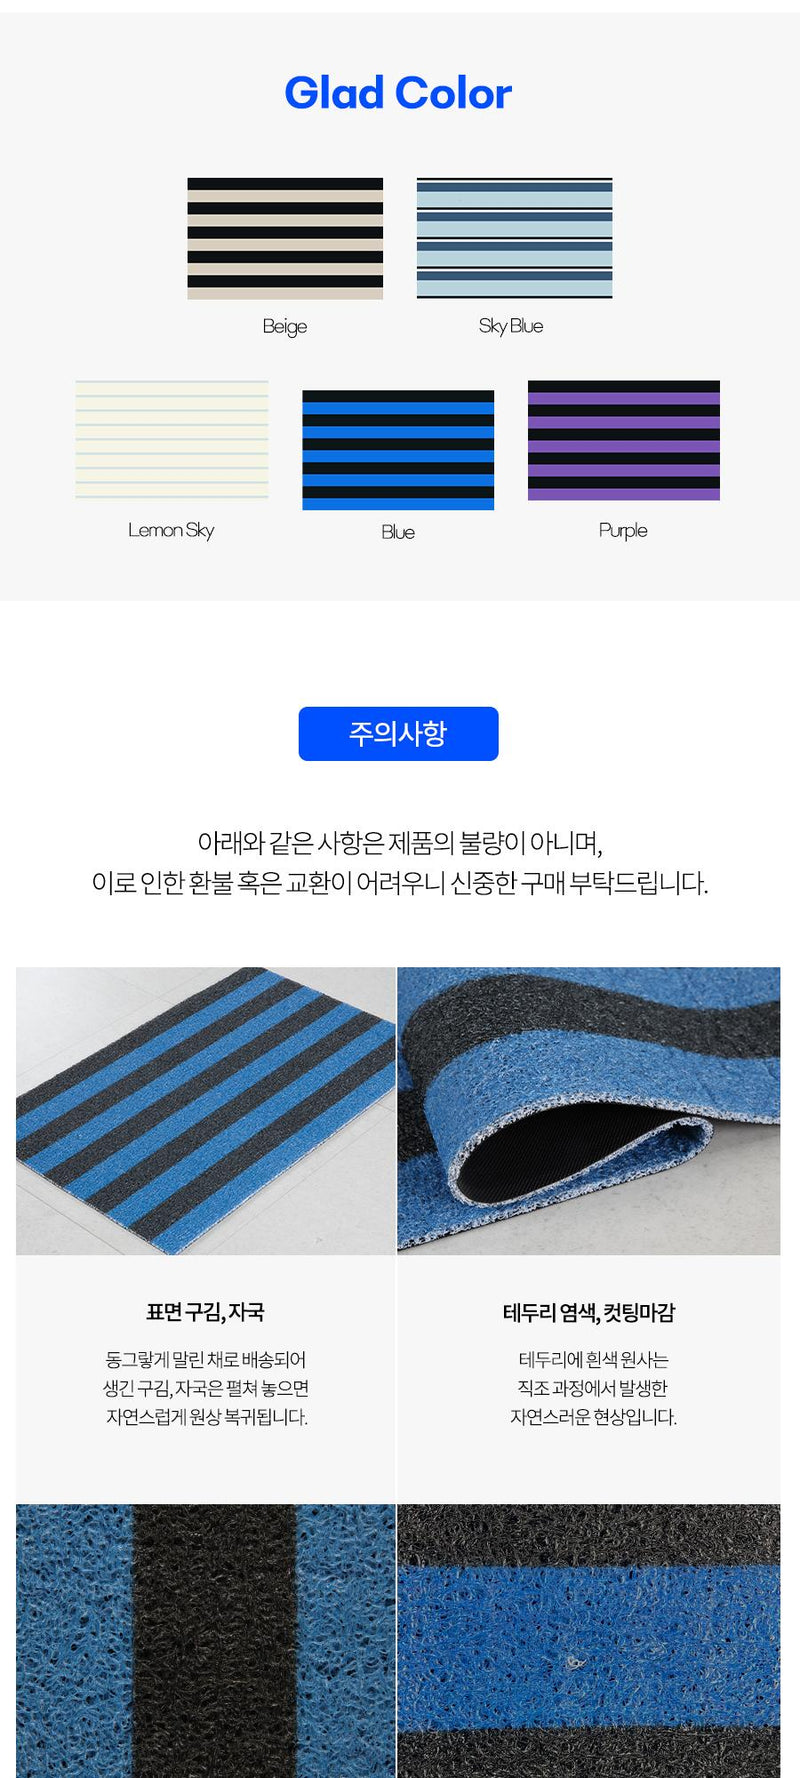 Sky Blue Glad Stripe Coil Mat